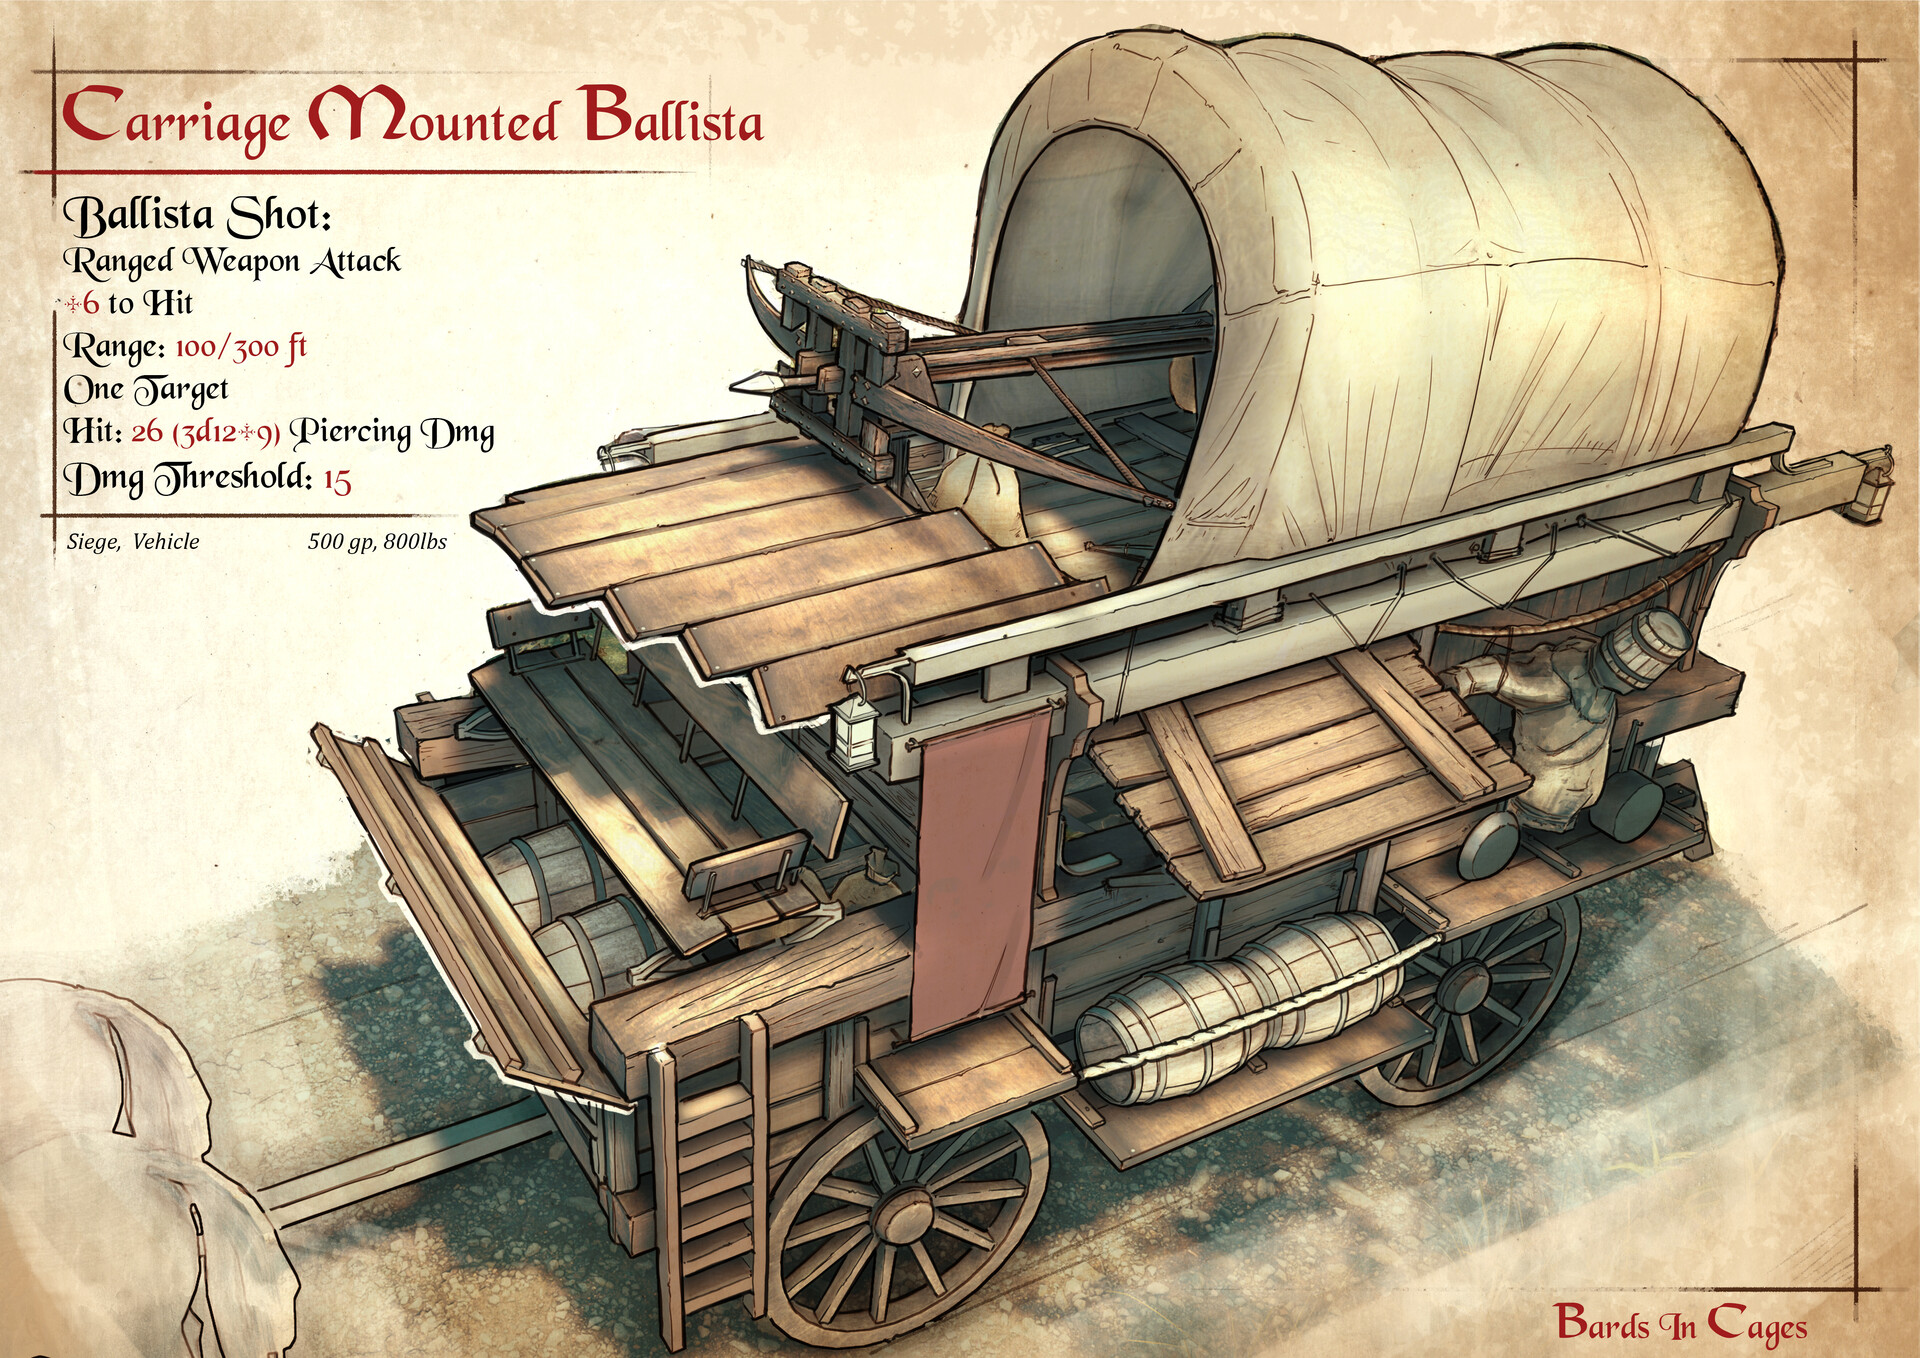 jonathan-lim-ballista-mounted-carriage.jpg